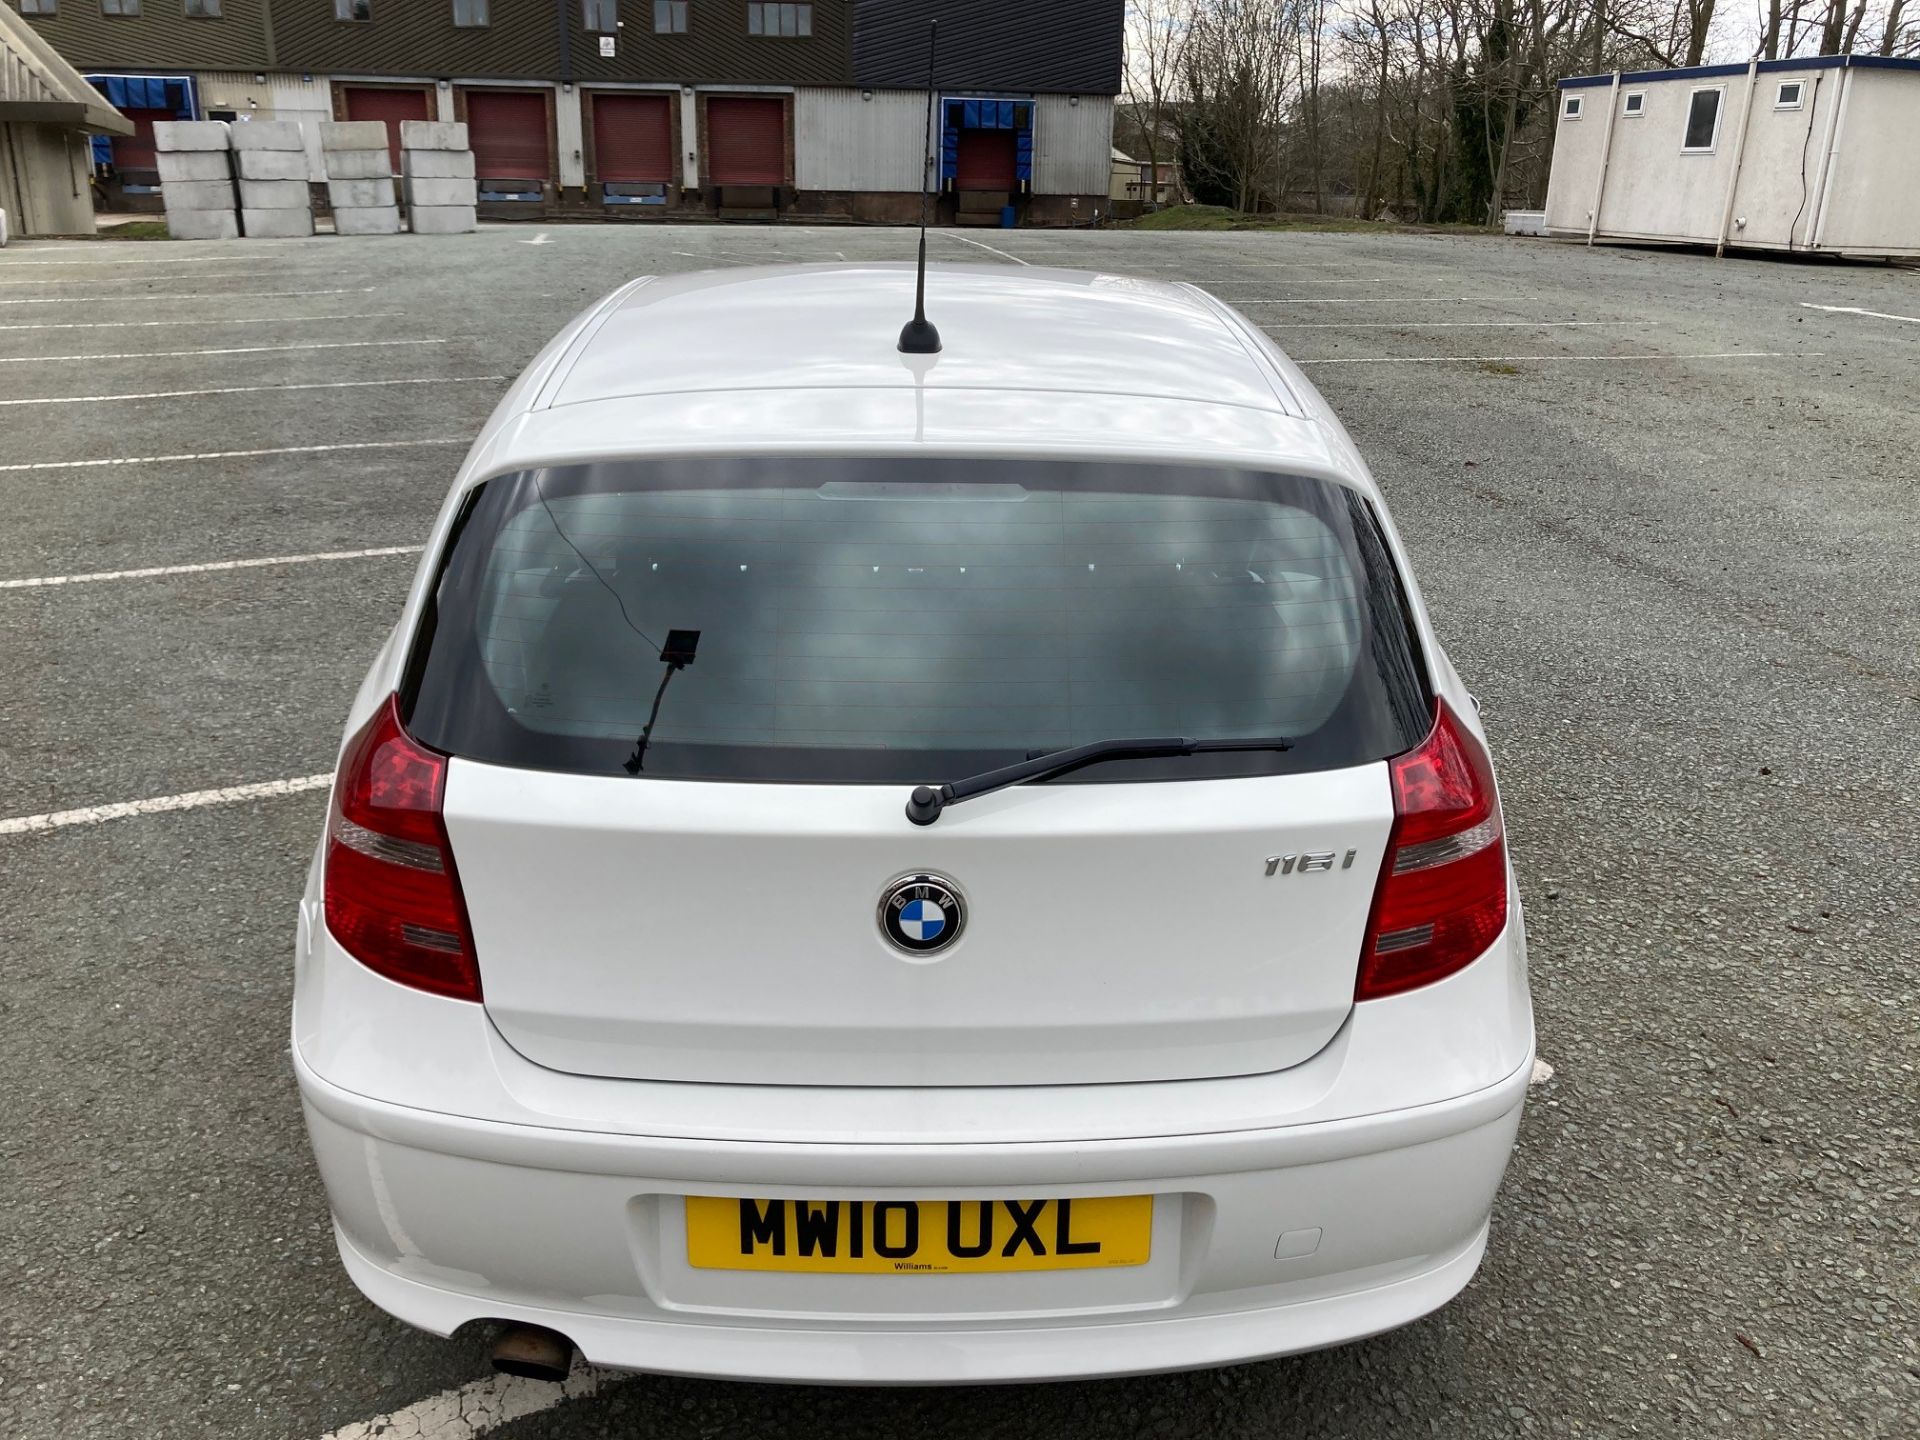 BMW 1 Series Petrol Hatchback, registration no. MW - Image 7 of 18